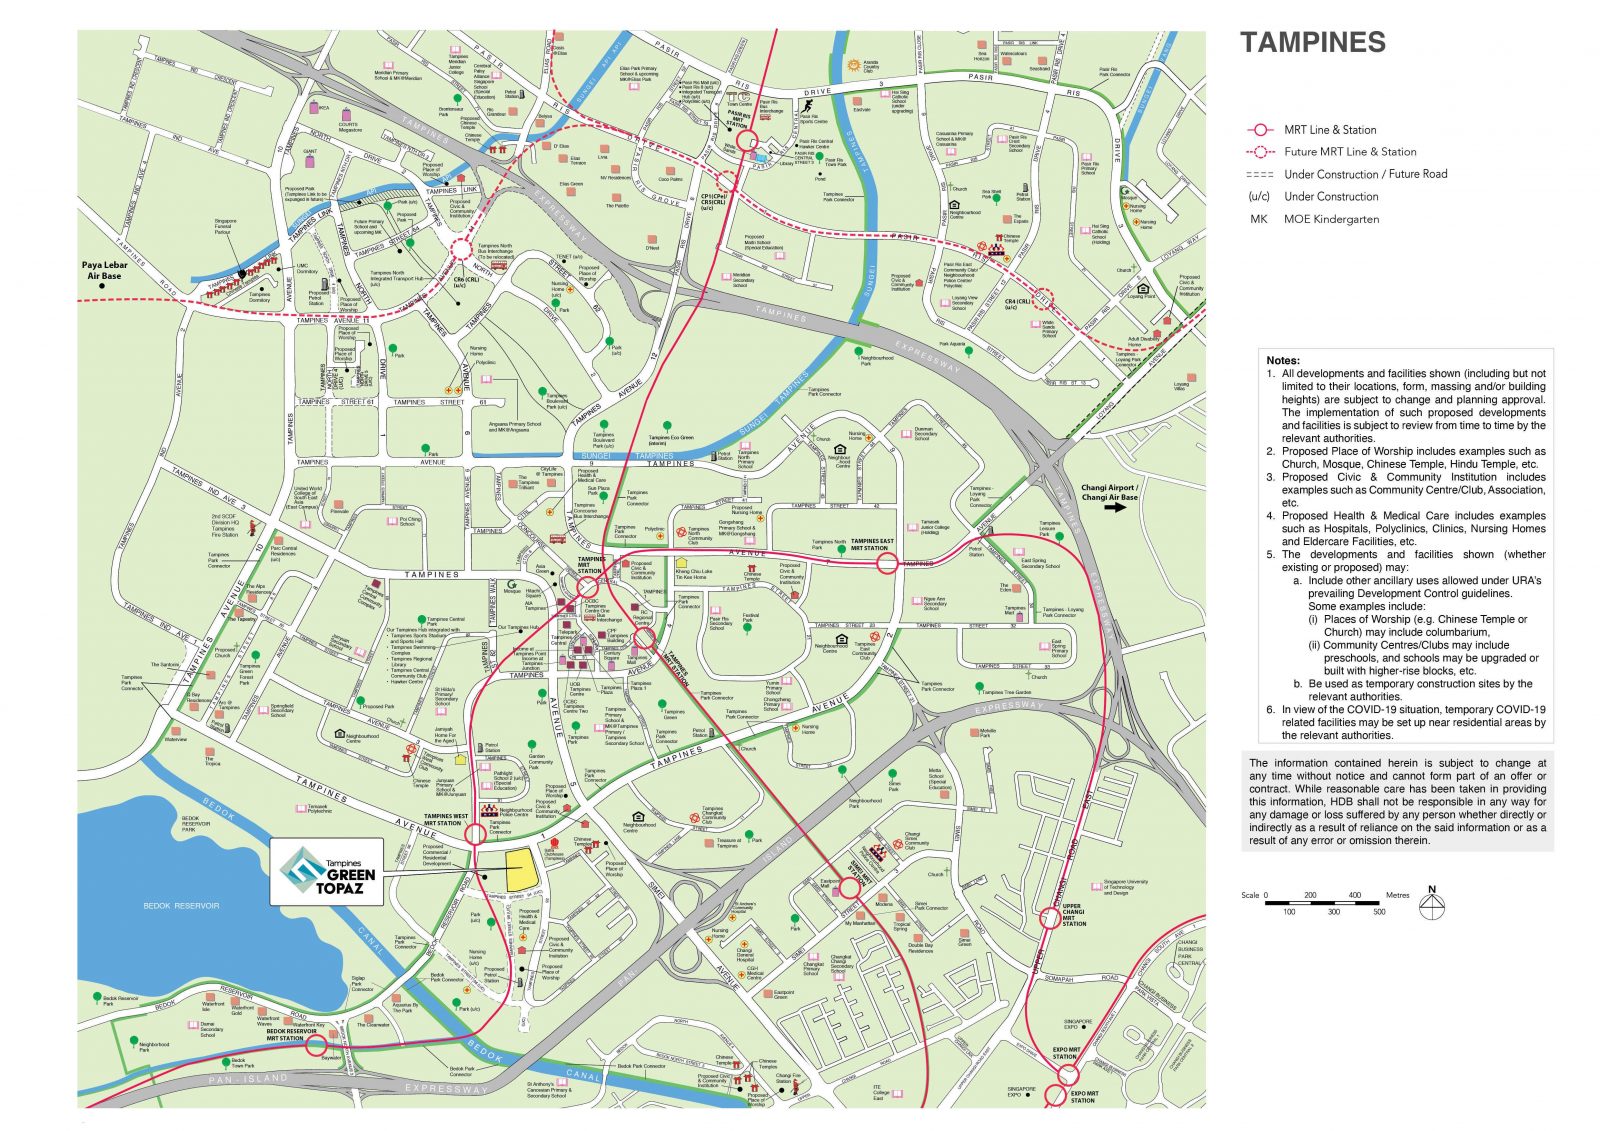 Tampines GreenTopaz Location Map